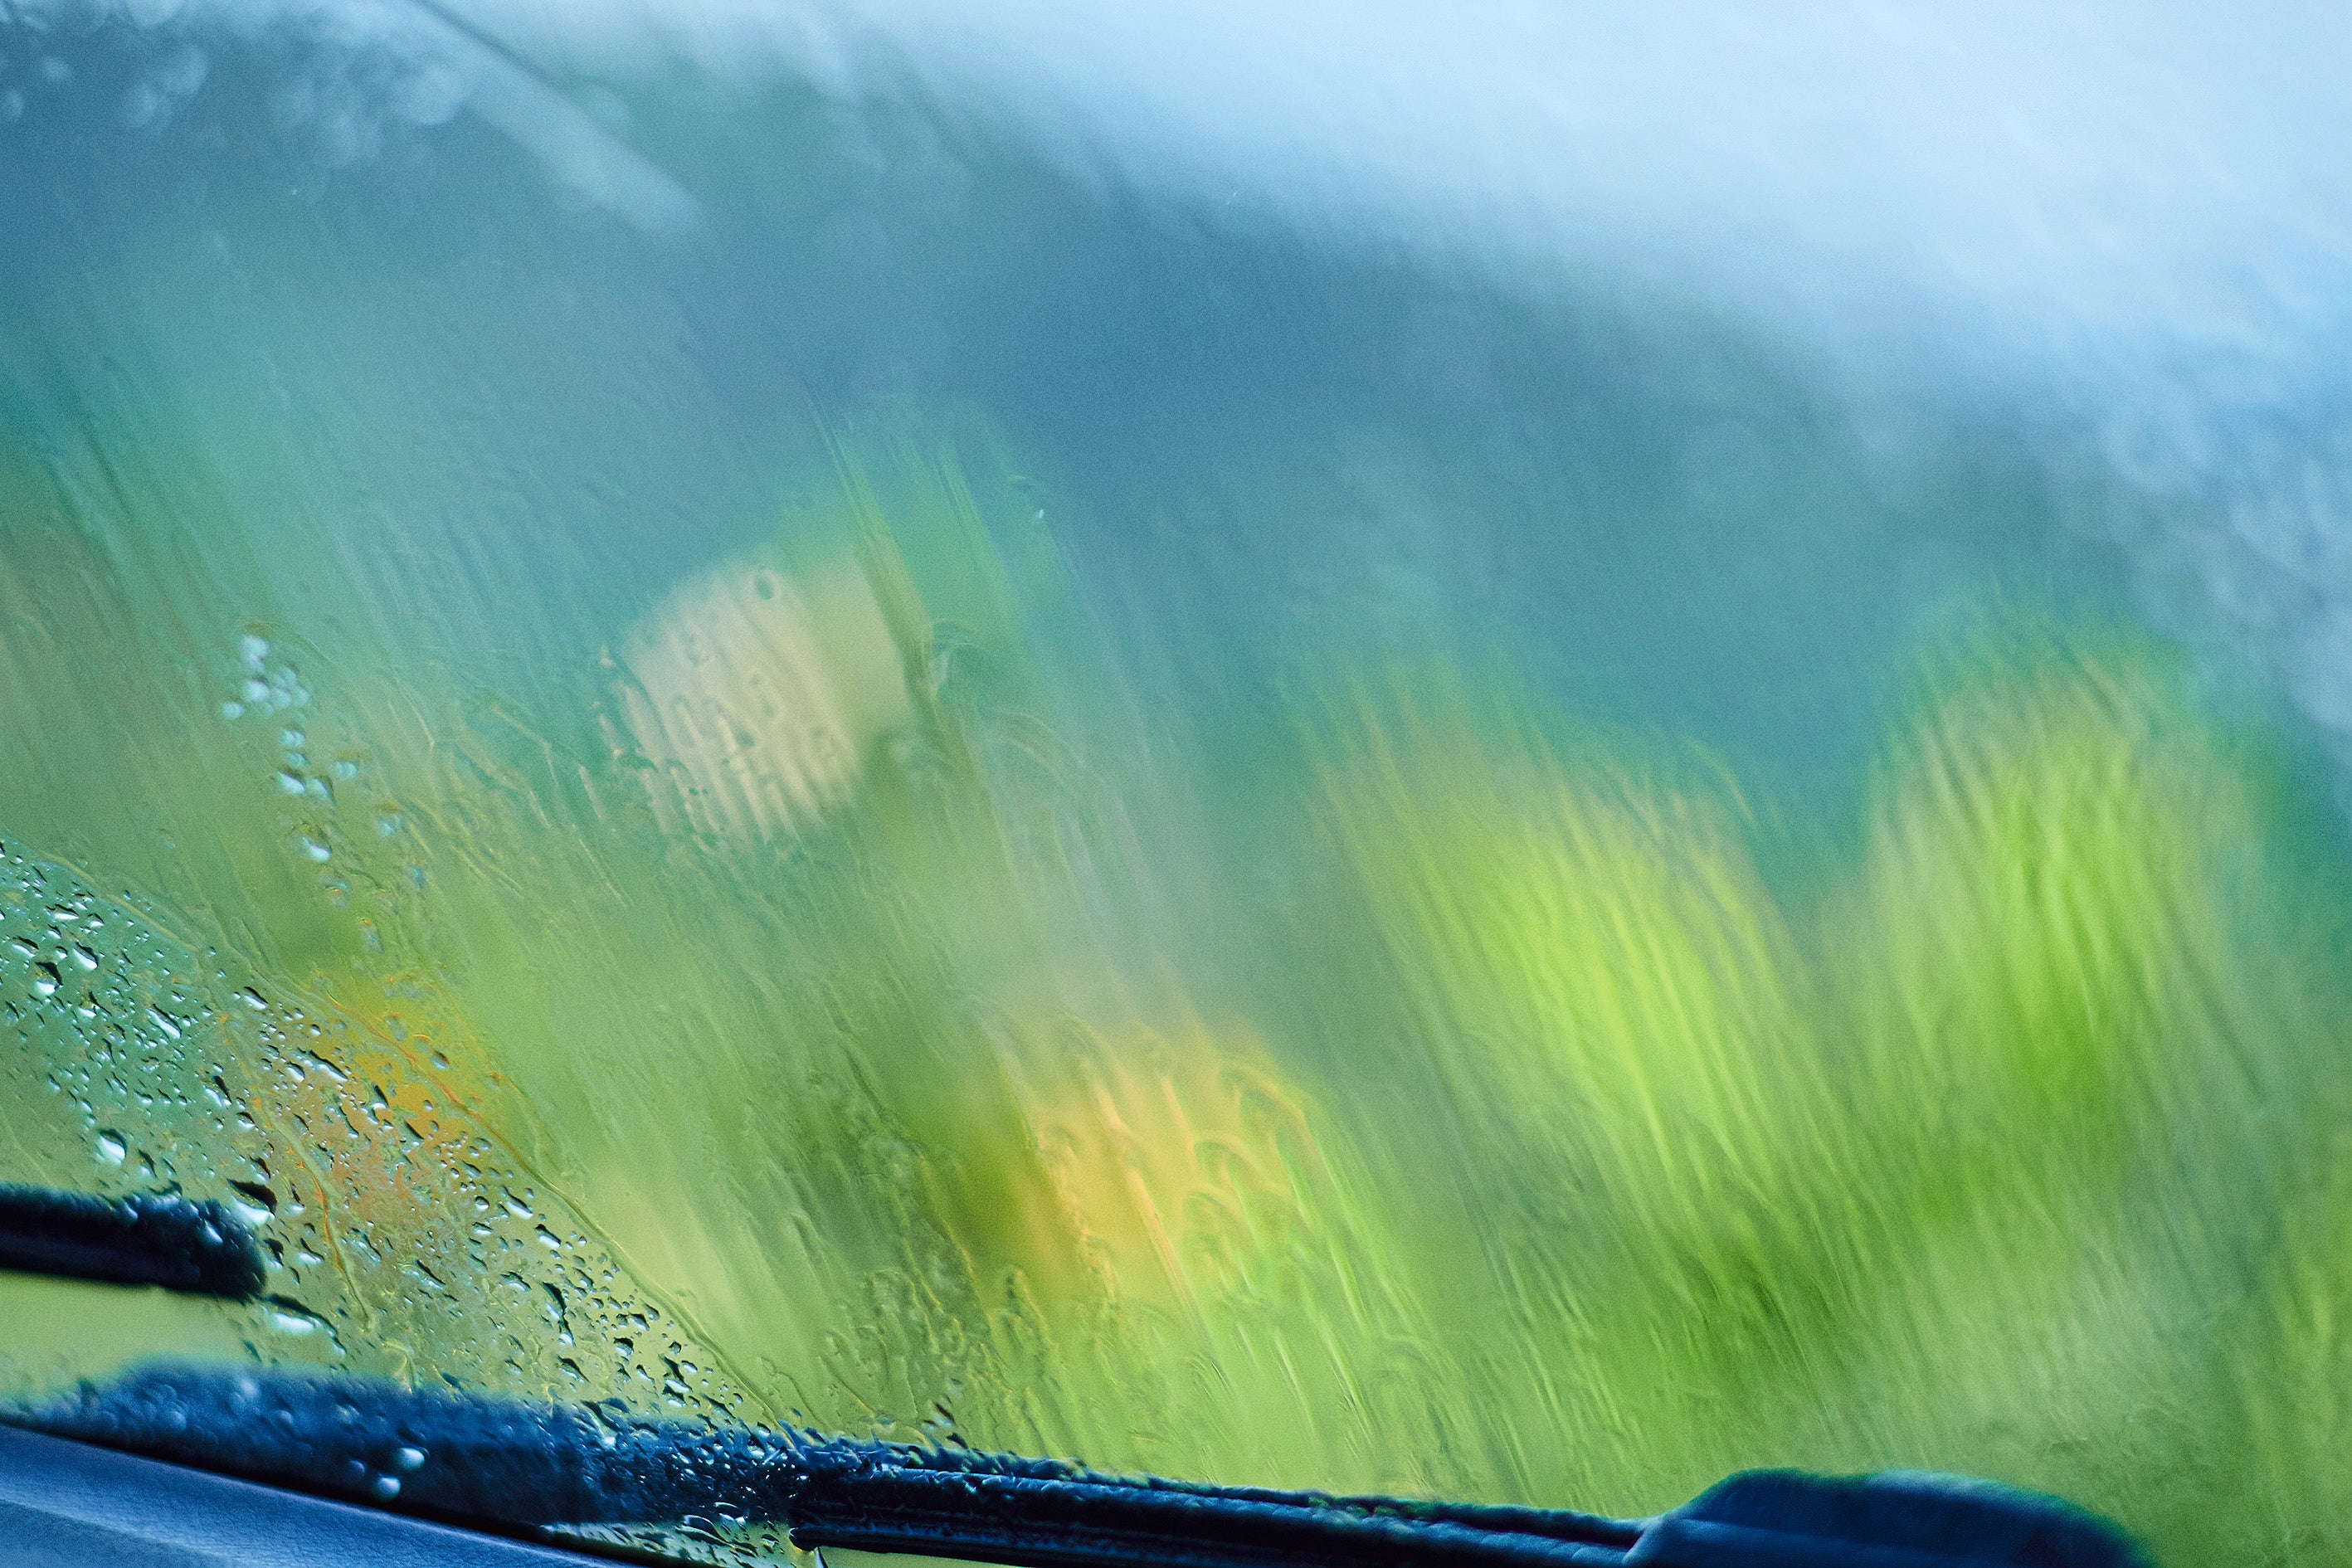 Rain on a Car Windscreen